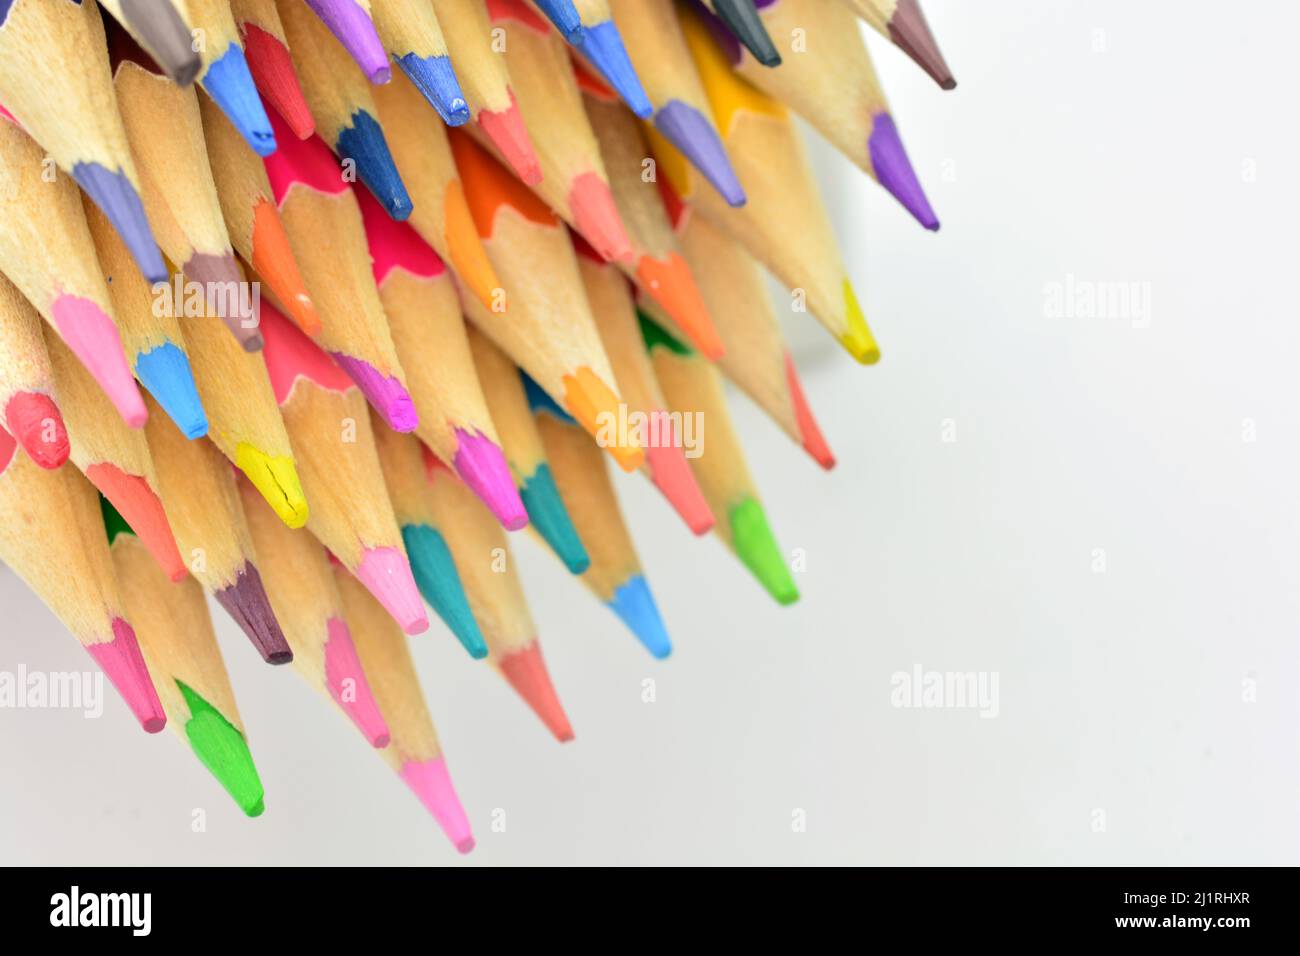 detalles de lápices de colores, sobre fondo blanco Foto de stock